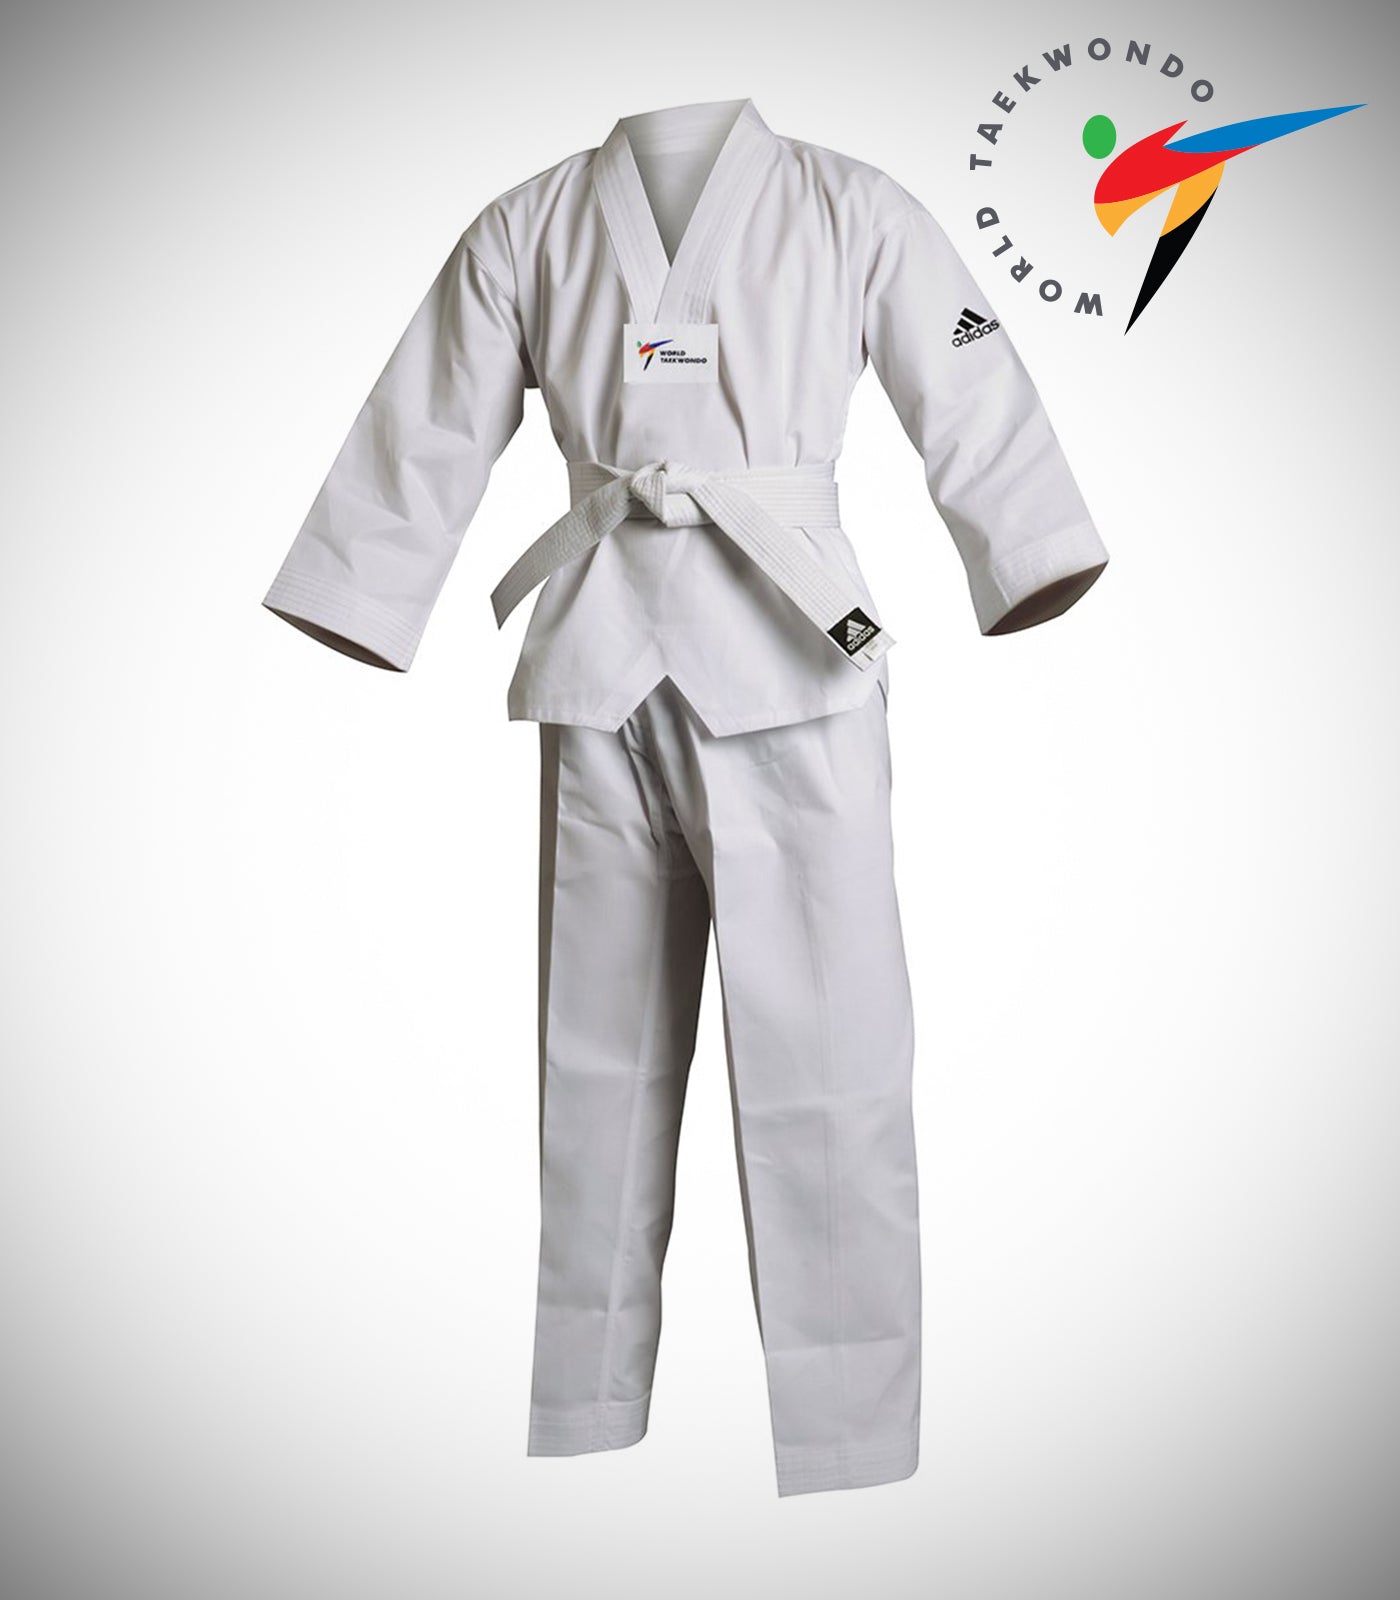 adidas taekwondo sparring gear